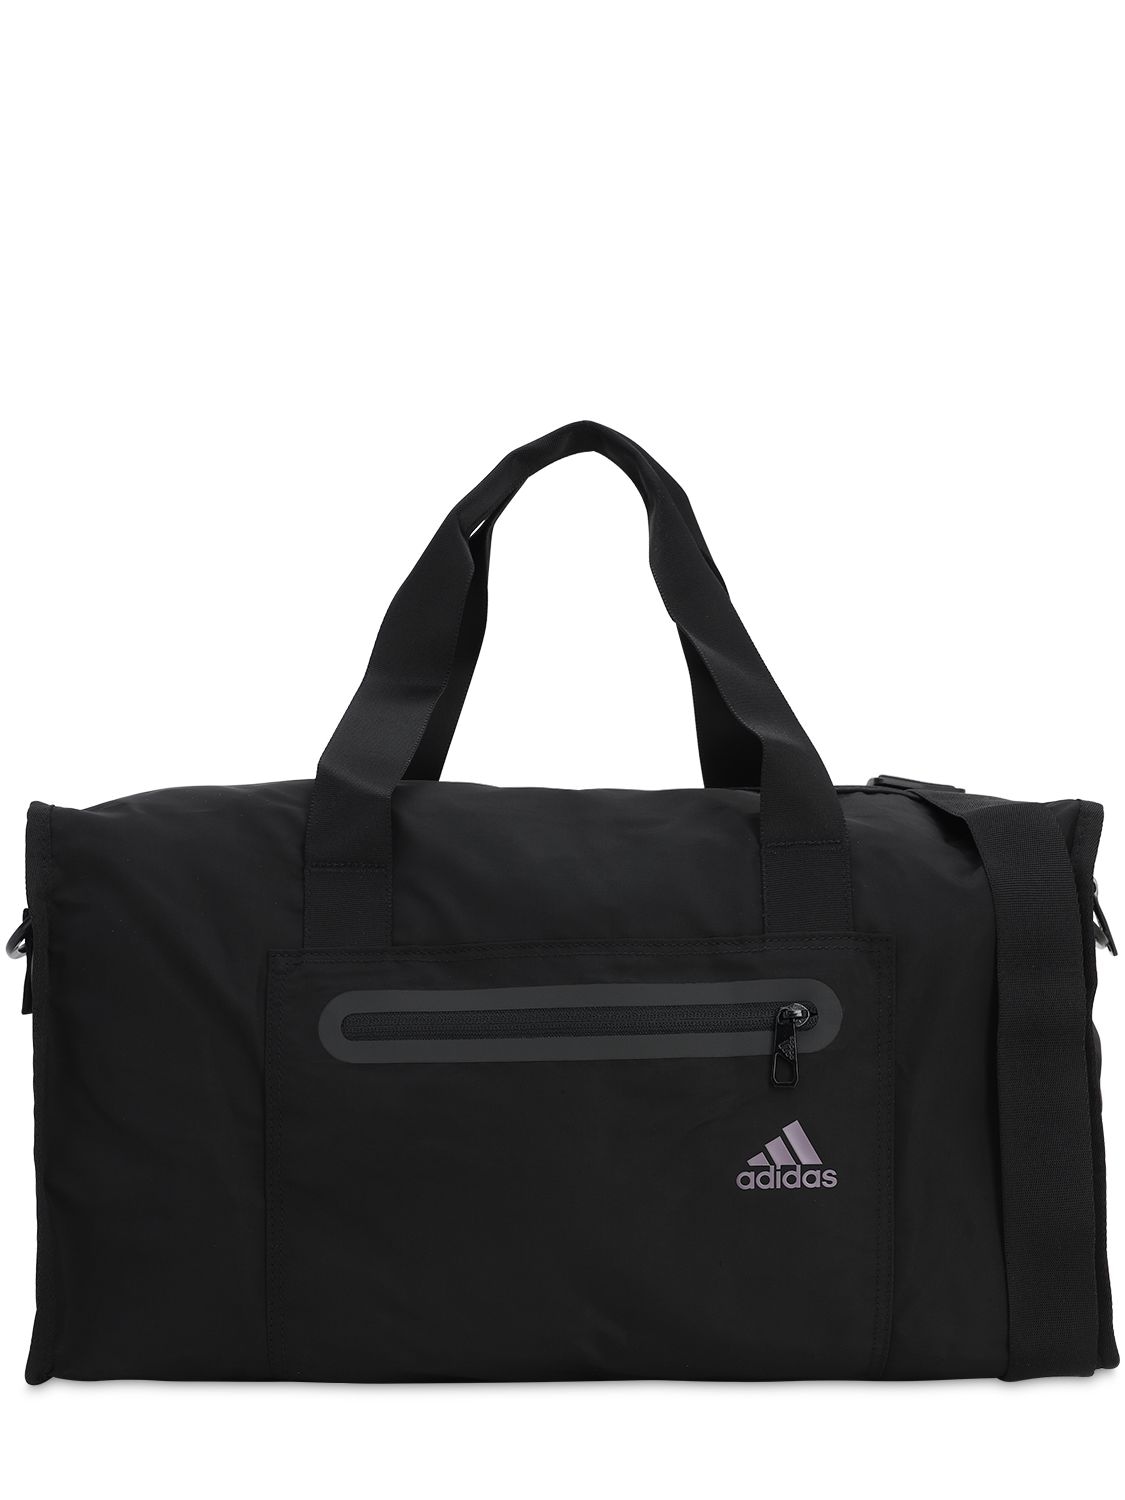 Adidas Originals Id Duffle Bag In Black